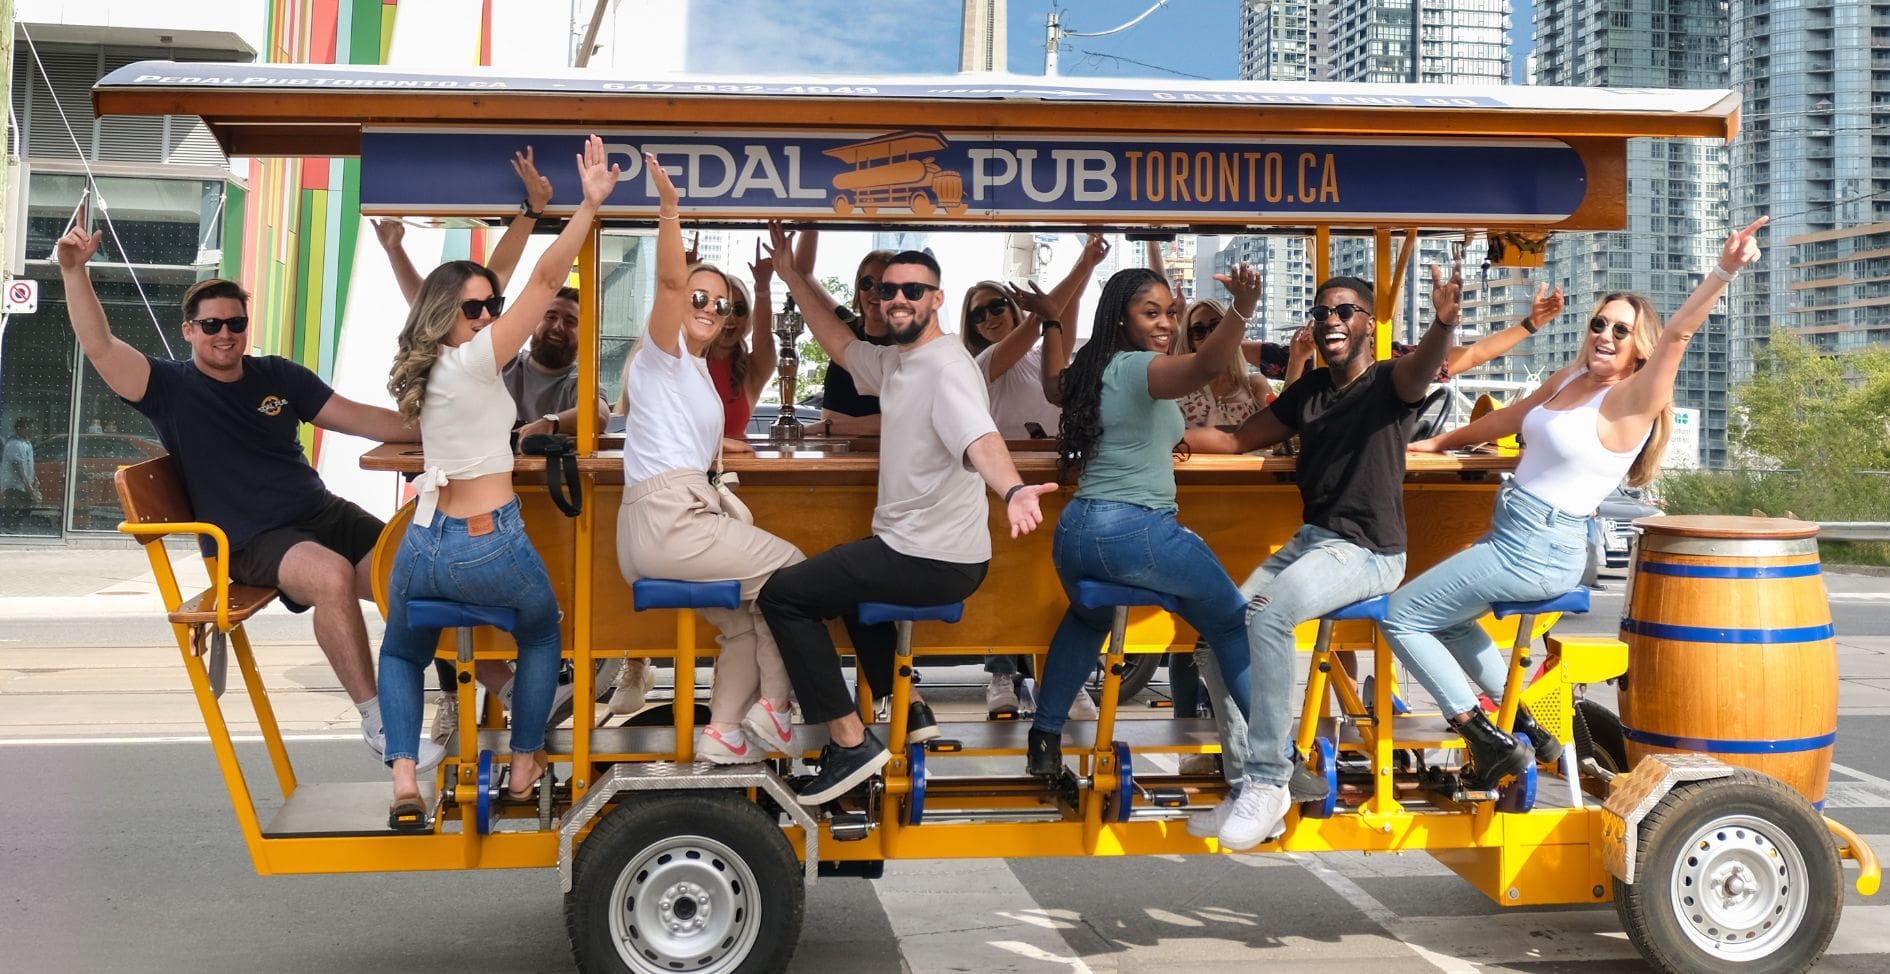 Pedal Pub Toronto tour group